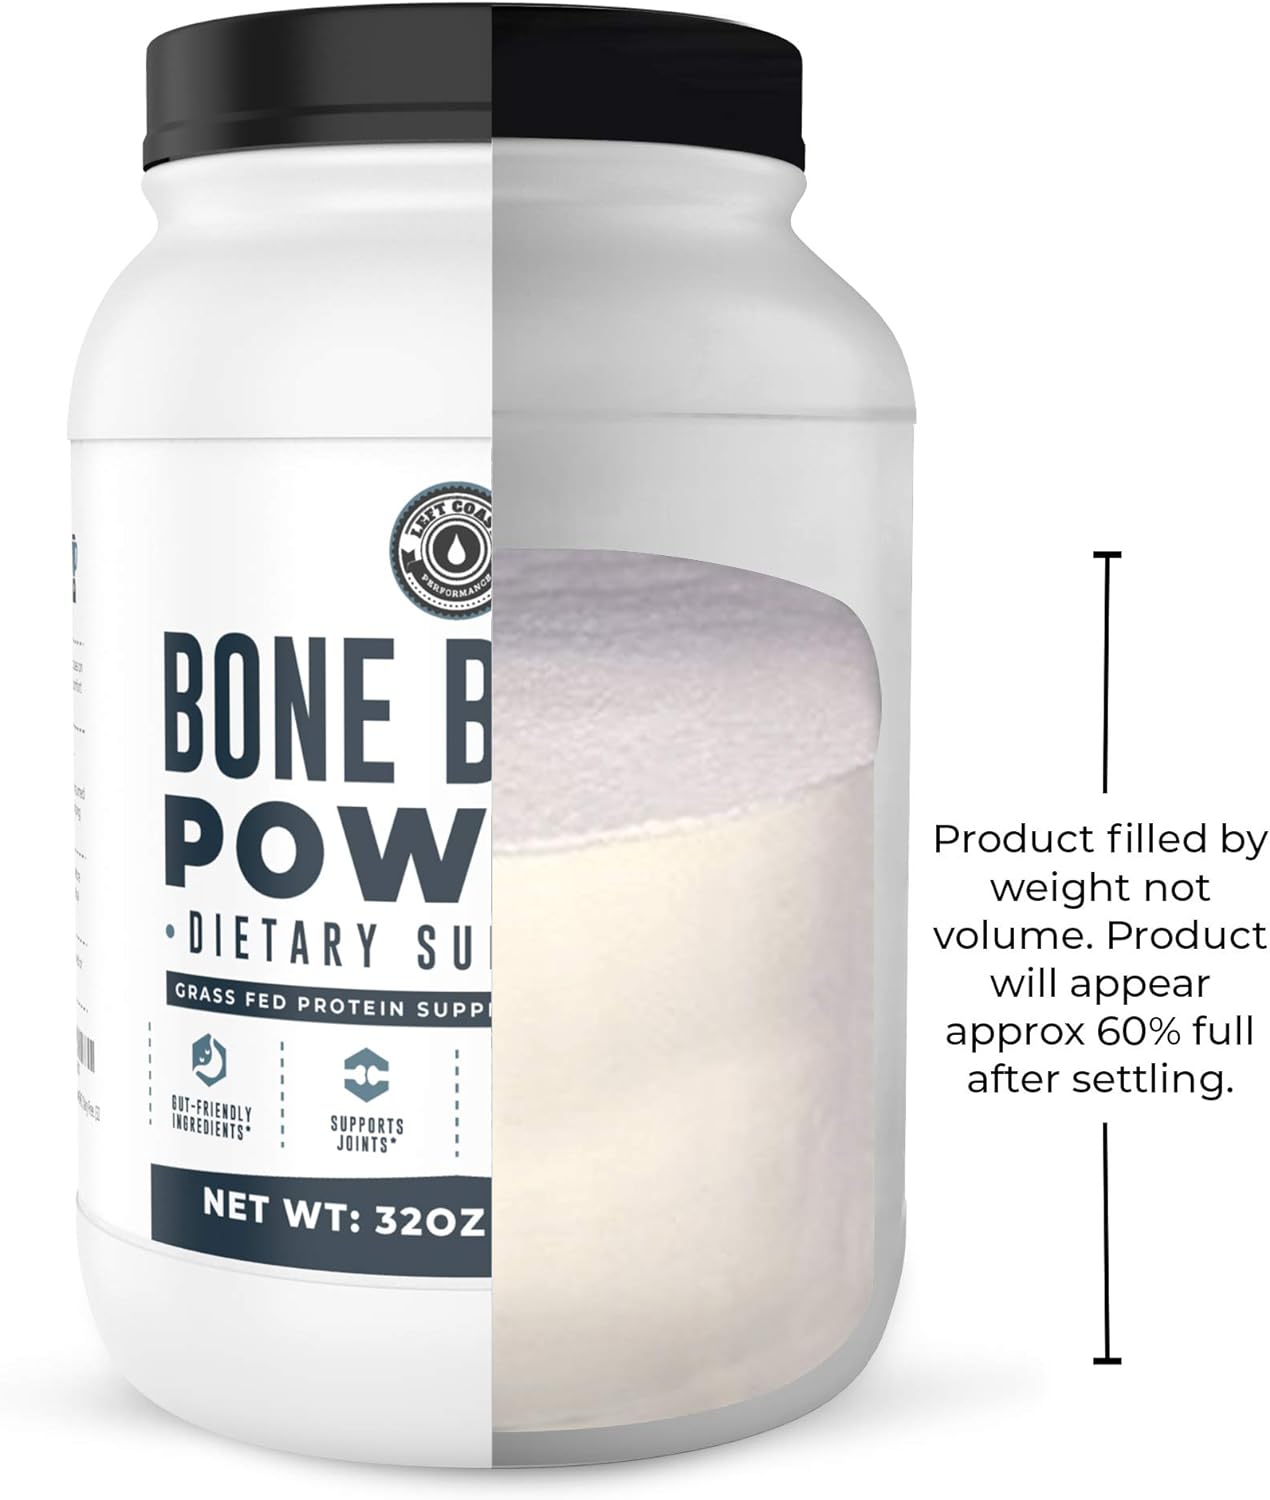 Bone Broth Powder, 2lb Pure Grass Fed Beef Bone Broth Protein Powder. Unflavored, Contains Collagen, Glucosamine & Gelatin, Paleo, Keto, Gut-Friendly, Non-GMO, Dairy Free. 32oz : Health & Household